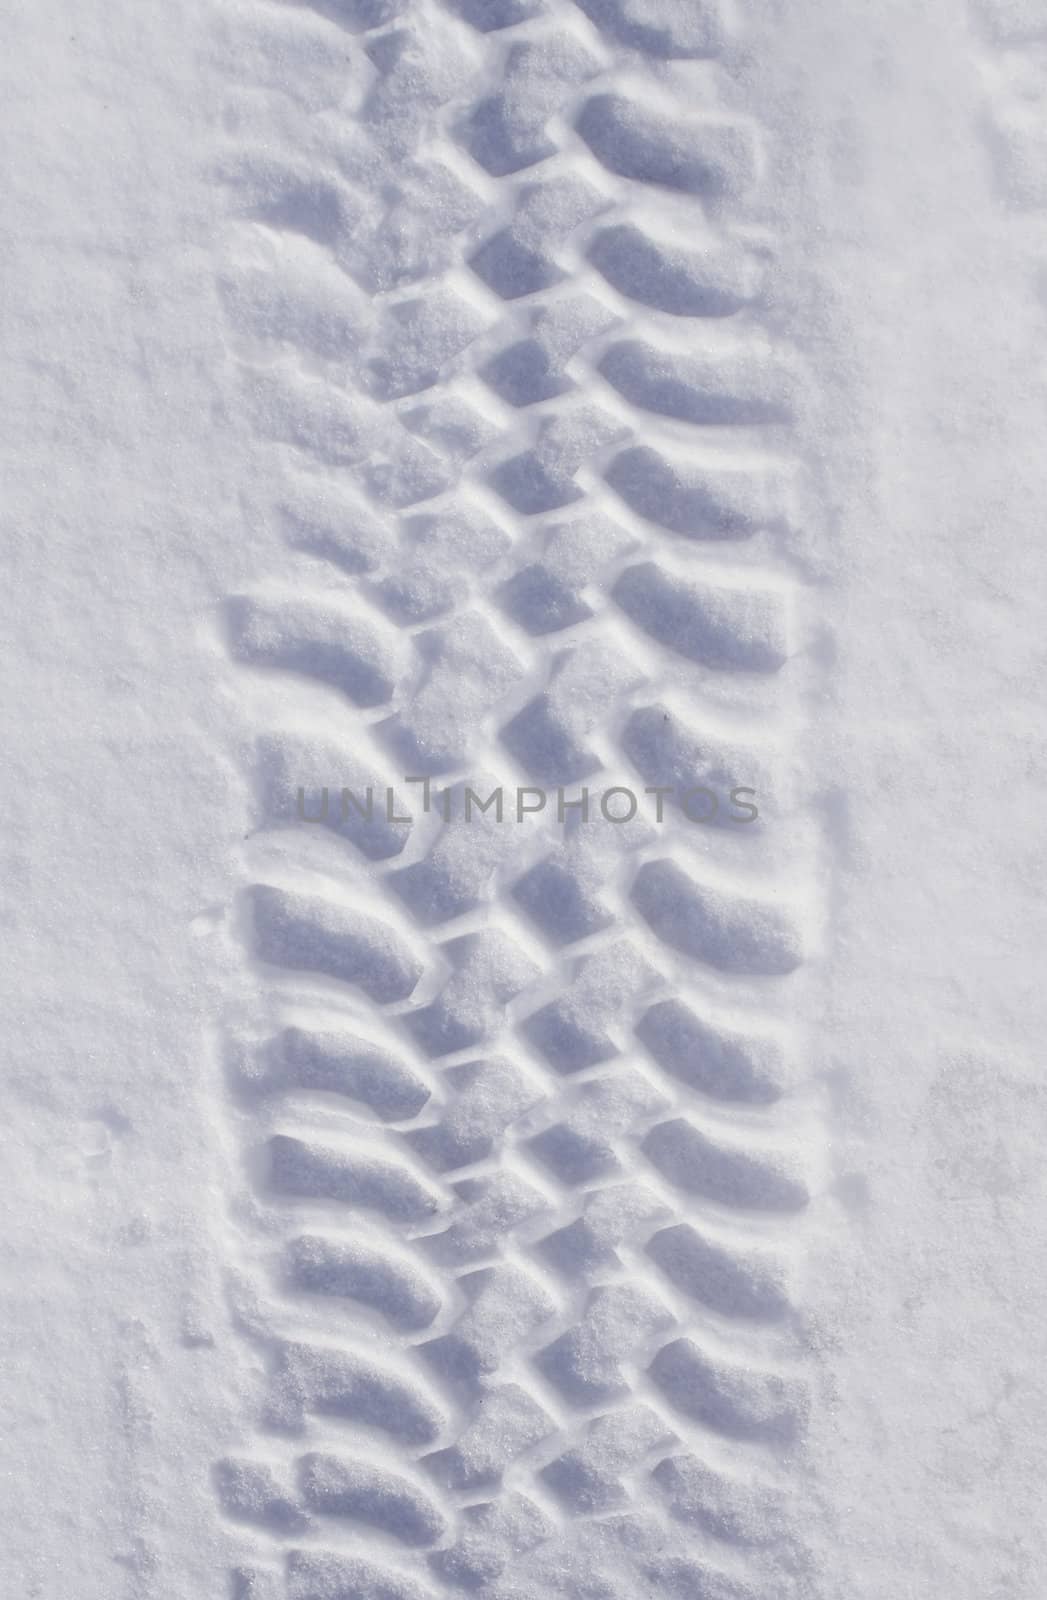 Tire track in snow by anterovium